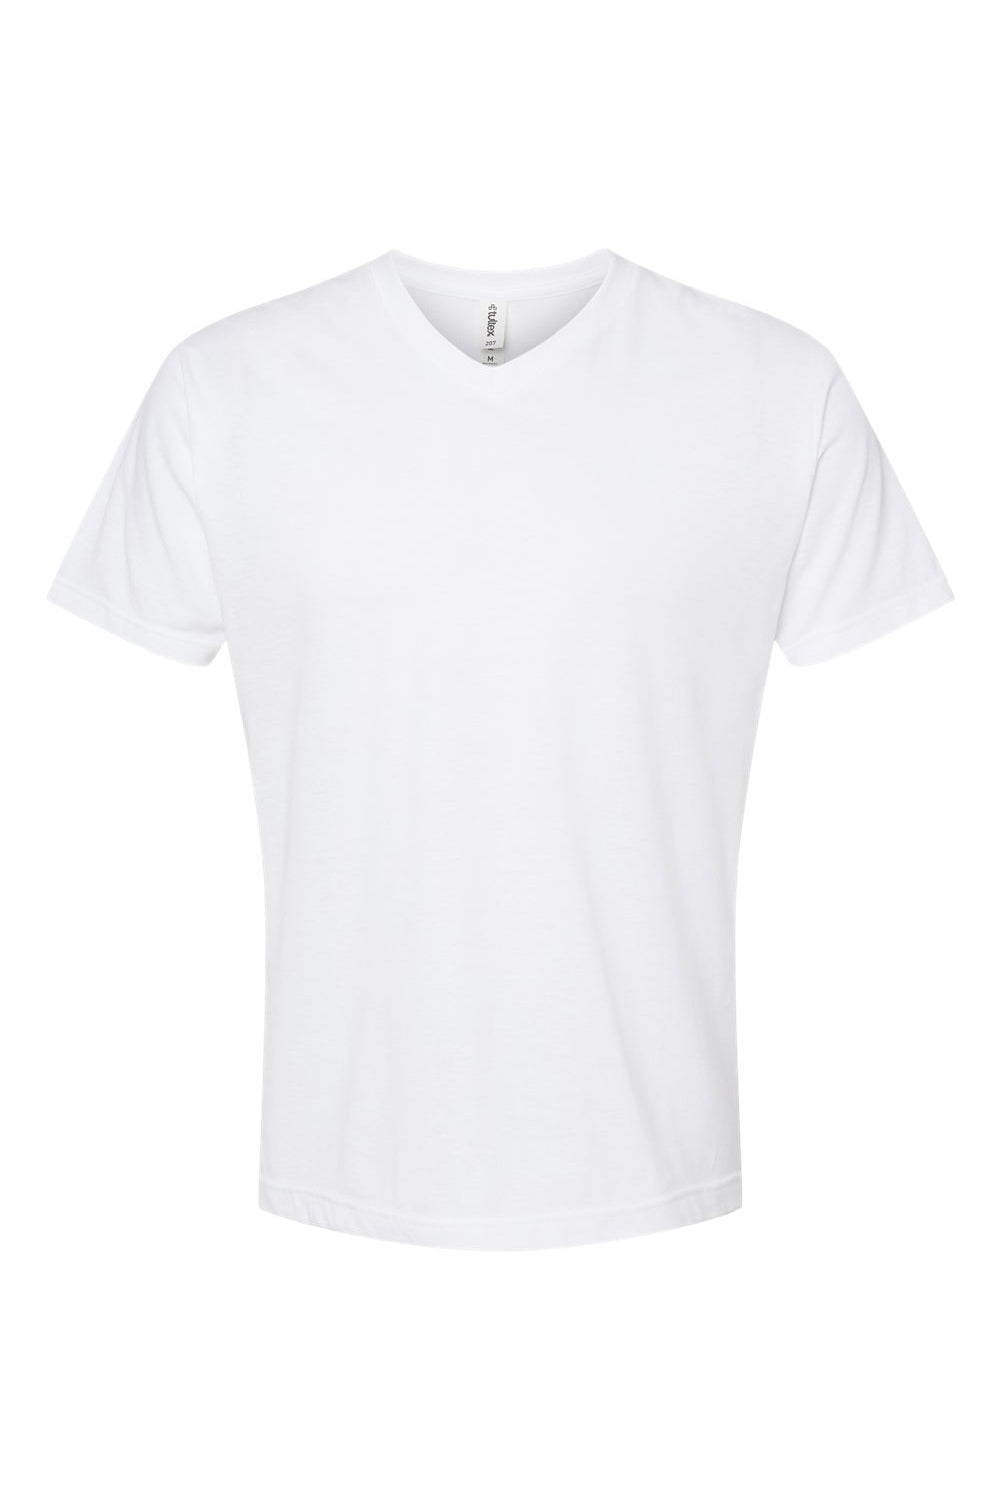 Tultex 207 Mens Poly-Rich Short Sleeve V-Neck T-Shirt White Flat Front